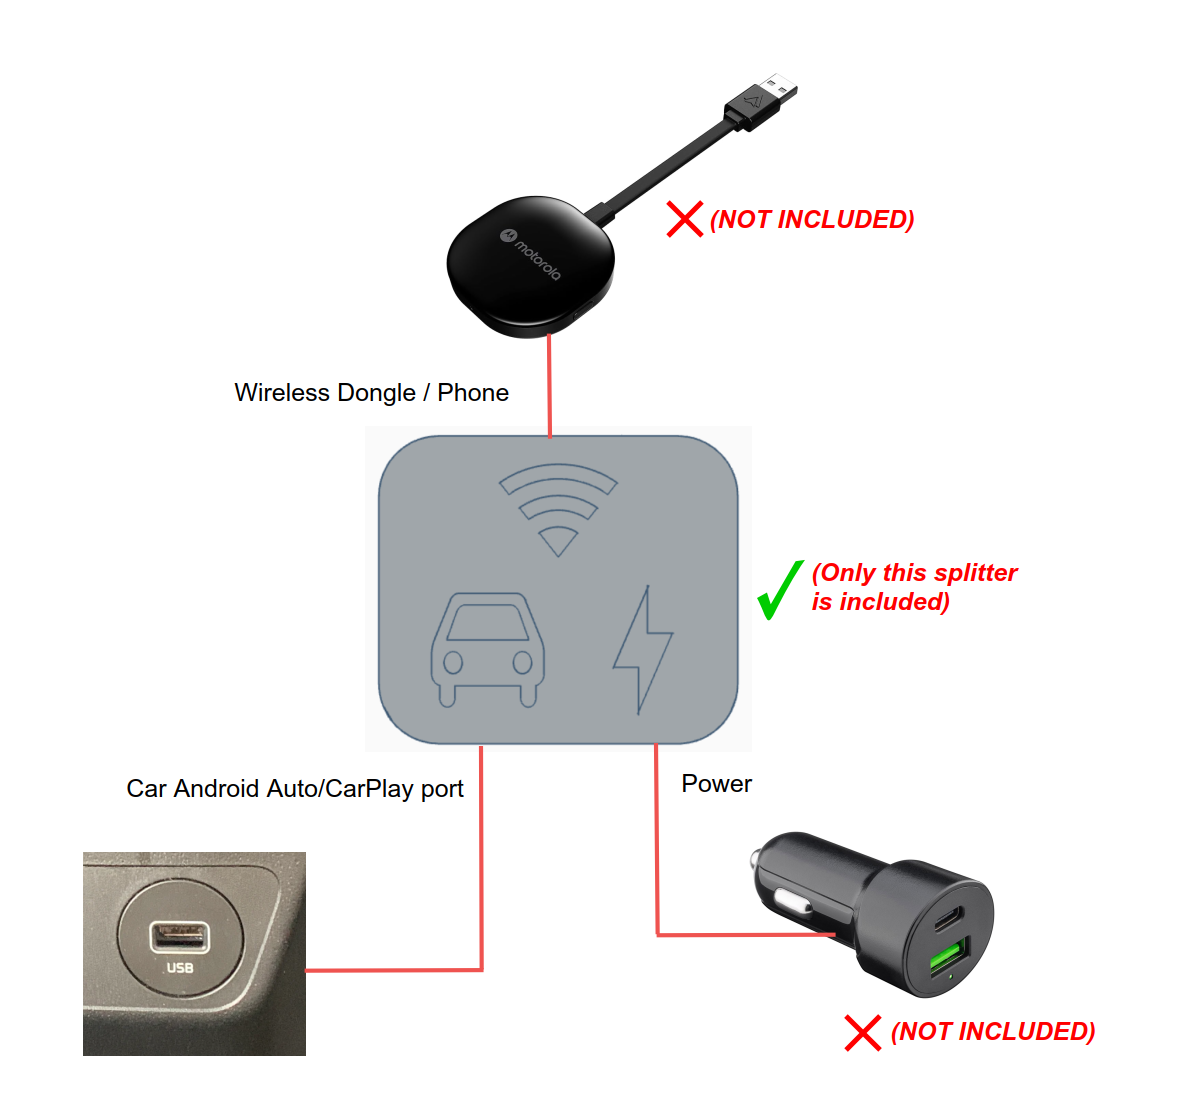 USB Power Data Splitter for Android Auto / CarPlay